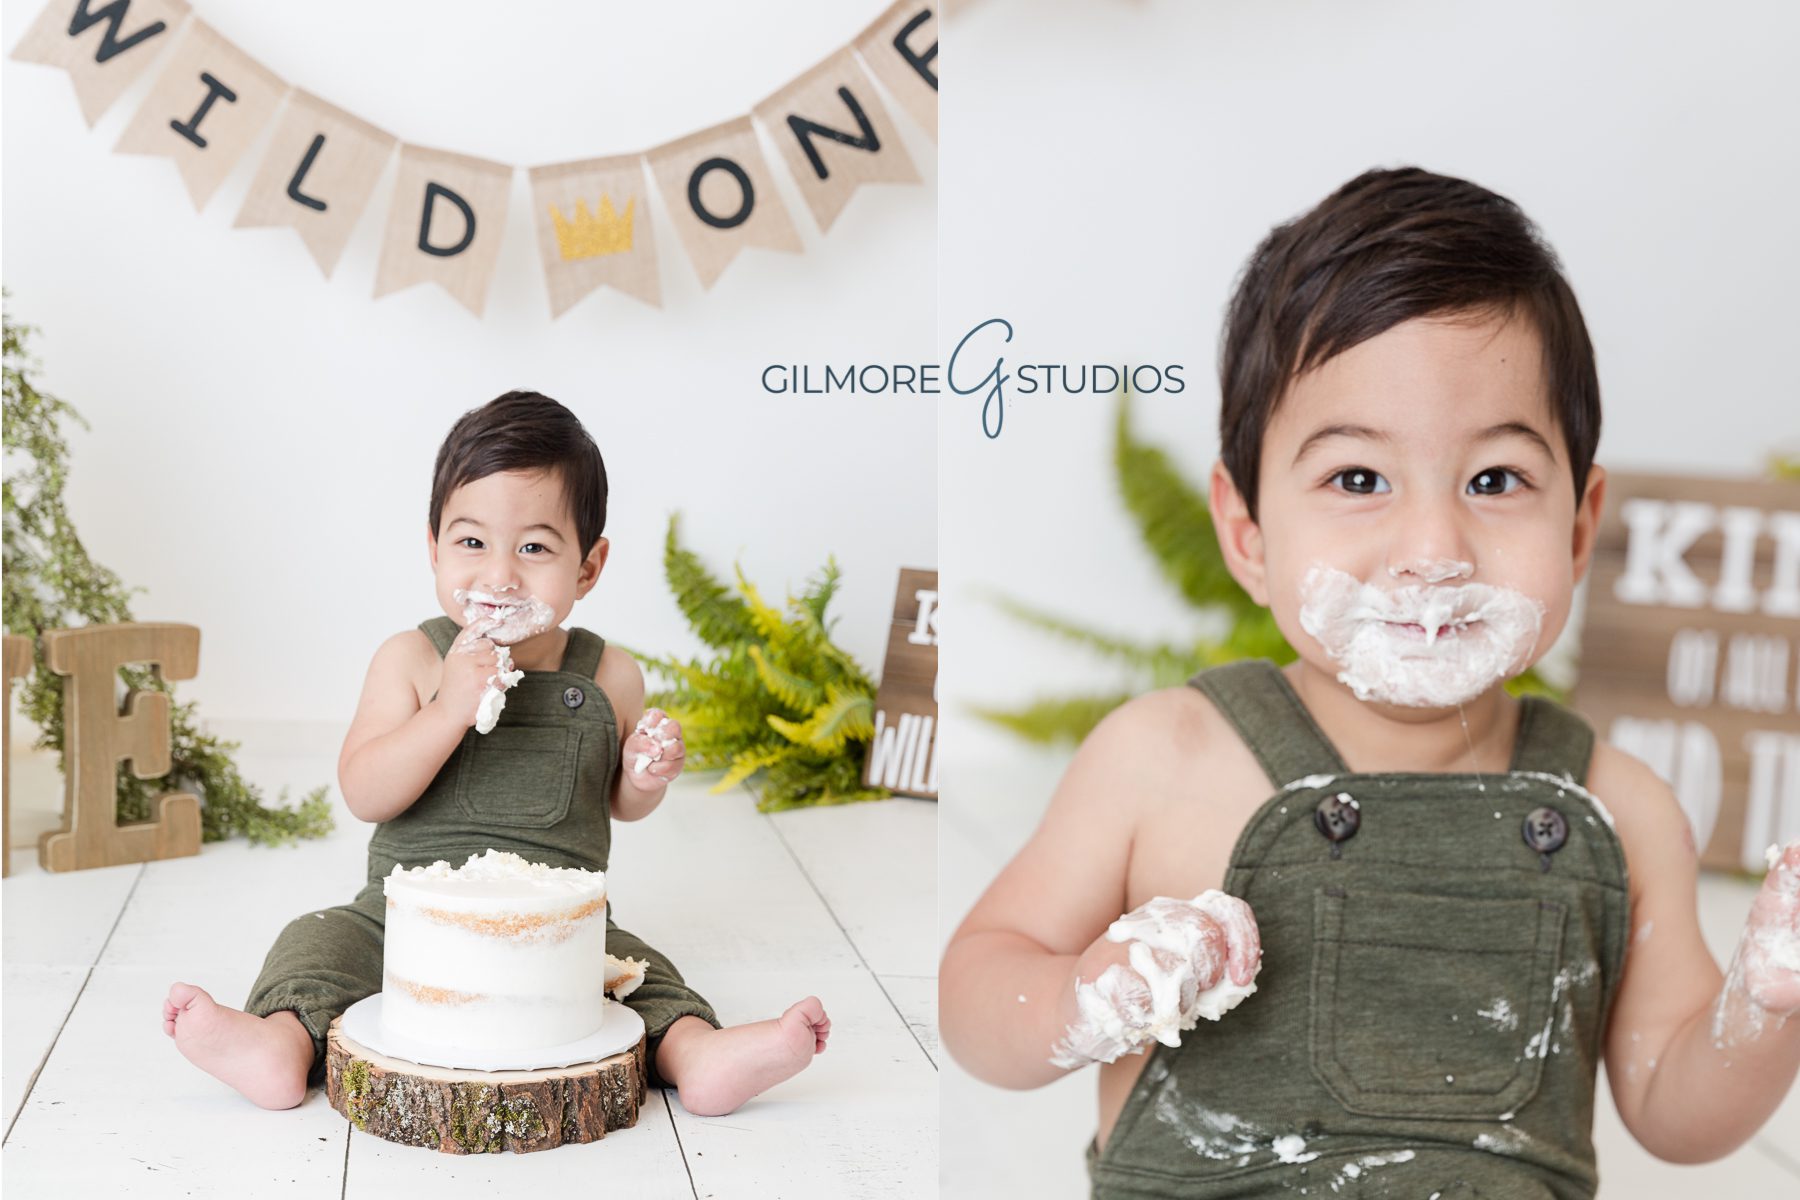 Wild One Cake Smash set, design, props, decor, photographer, 1st birthday